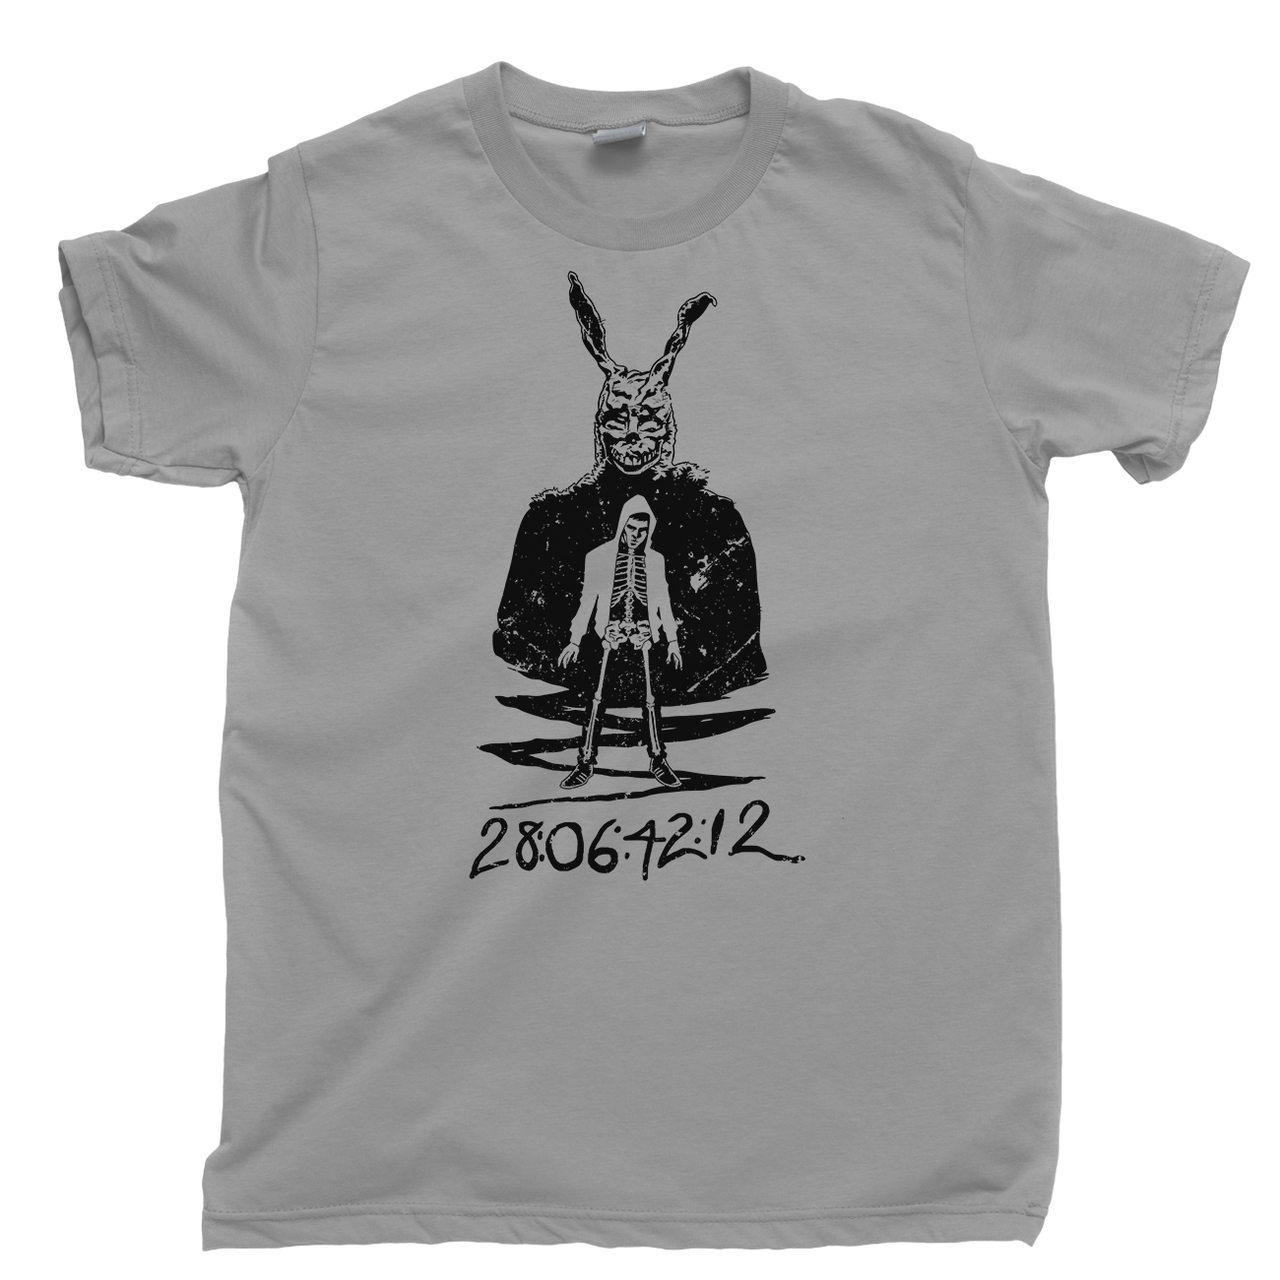 Donnie Darko T Shirt - 28 06 42 12, Frank Bunny Rabbit Tee